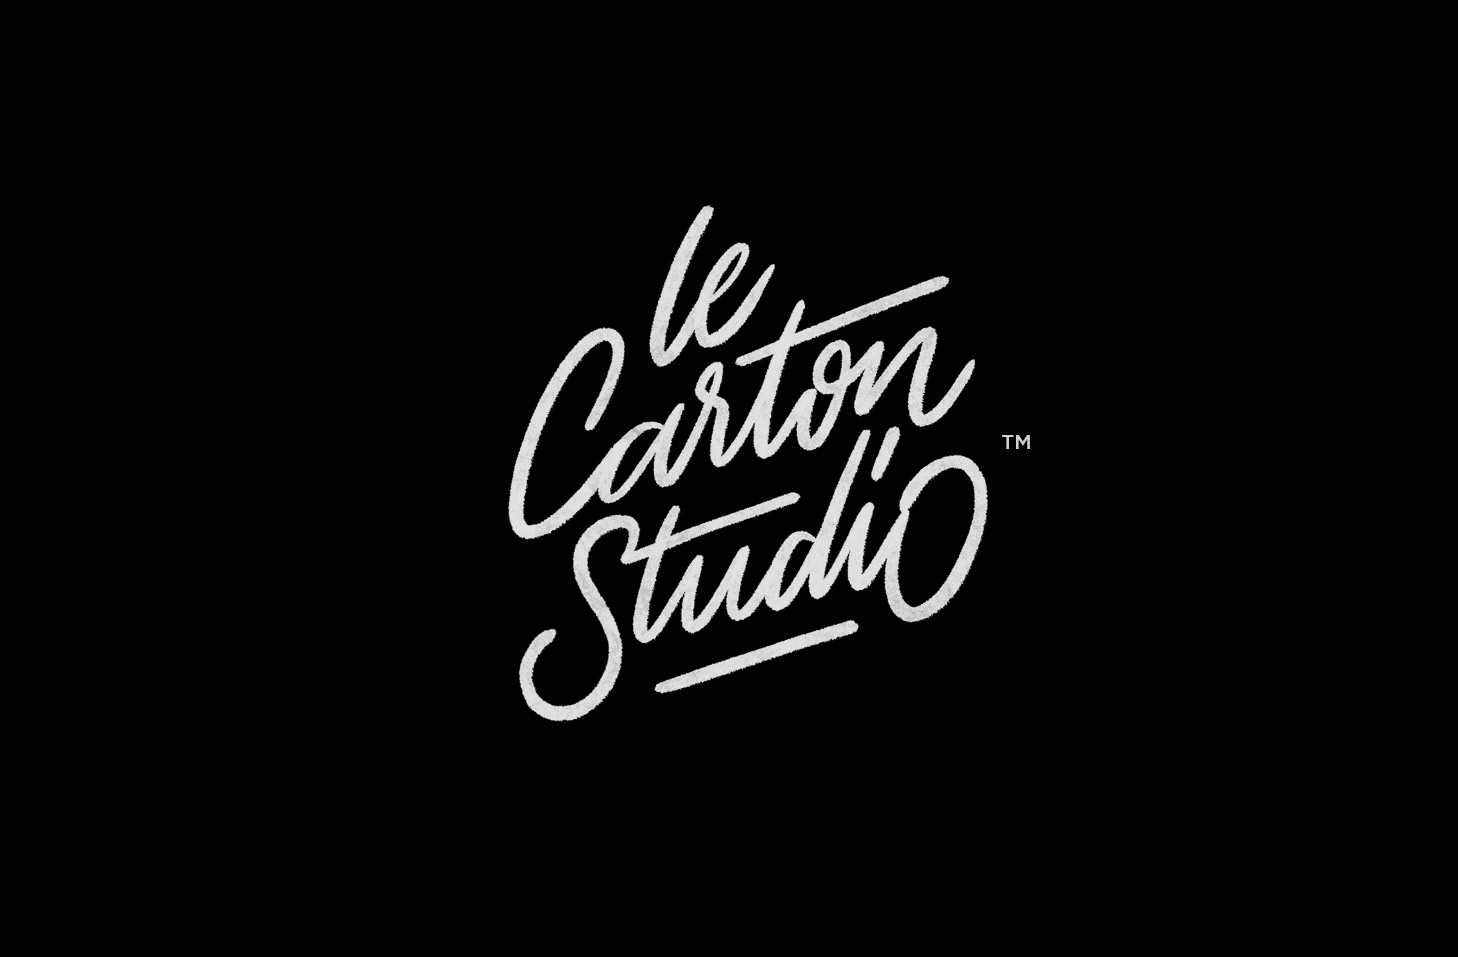 Le Carton Studio